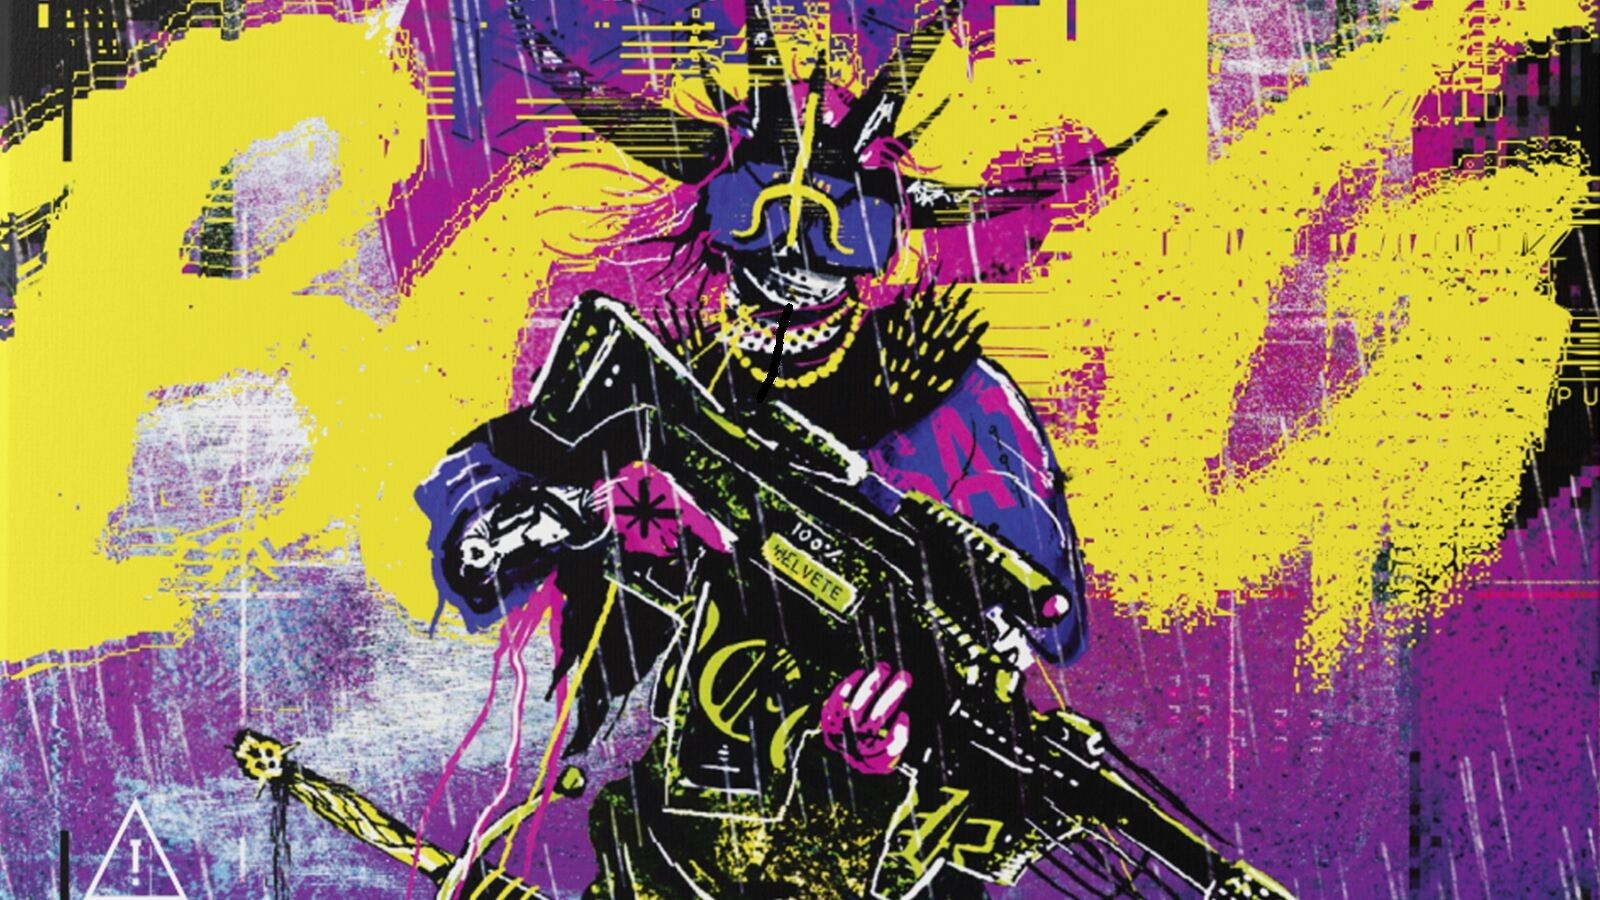 Cy_Borg Bright purple and yellow art depicting a stylized cyberpunk character holding a gun.